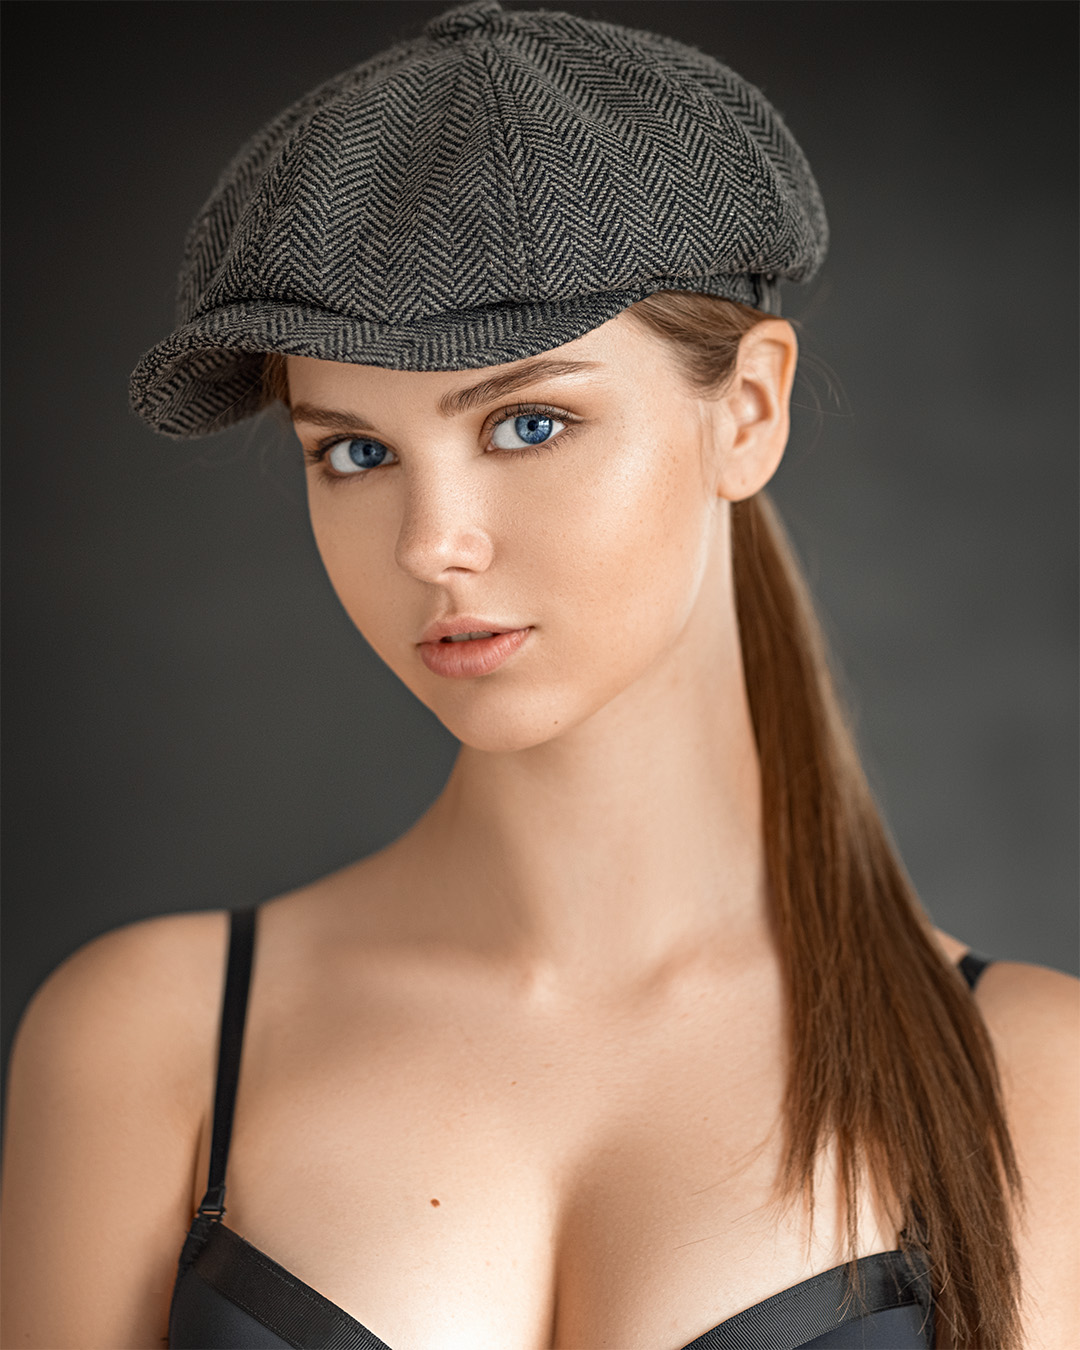 People 1080x1350 Evgeny Sibiraev women model ponytail hat